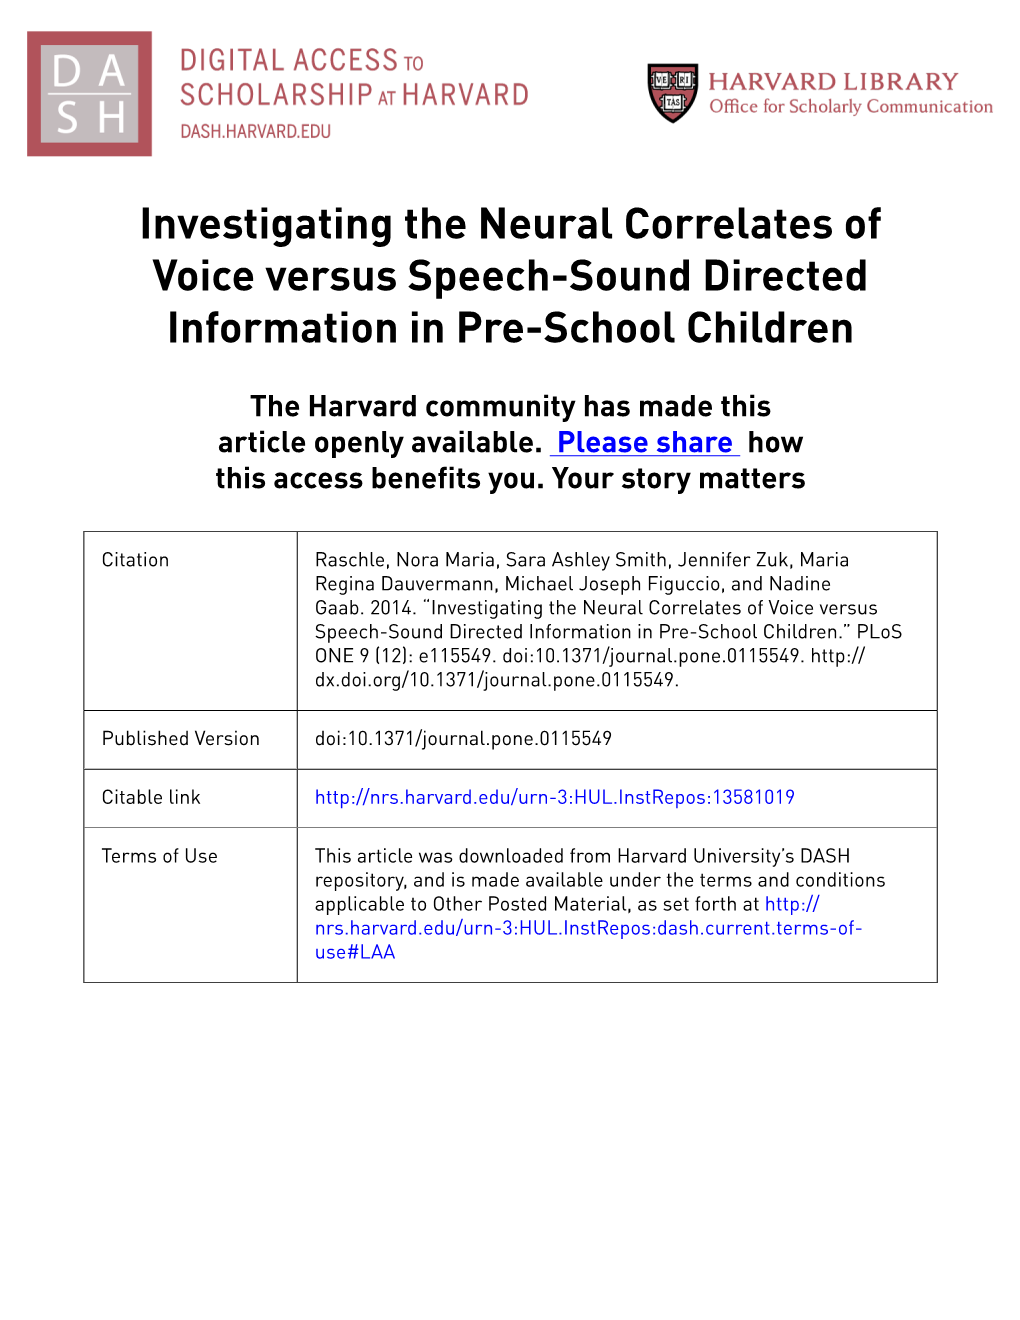 Investigating the Neural Correlates of Voice Versus Speech-Sound Directed Information in Pre-School Children